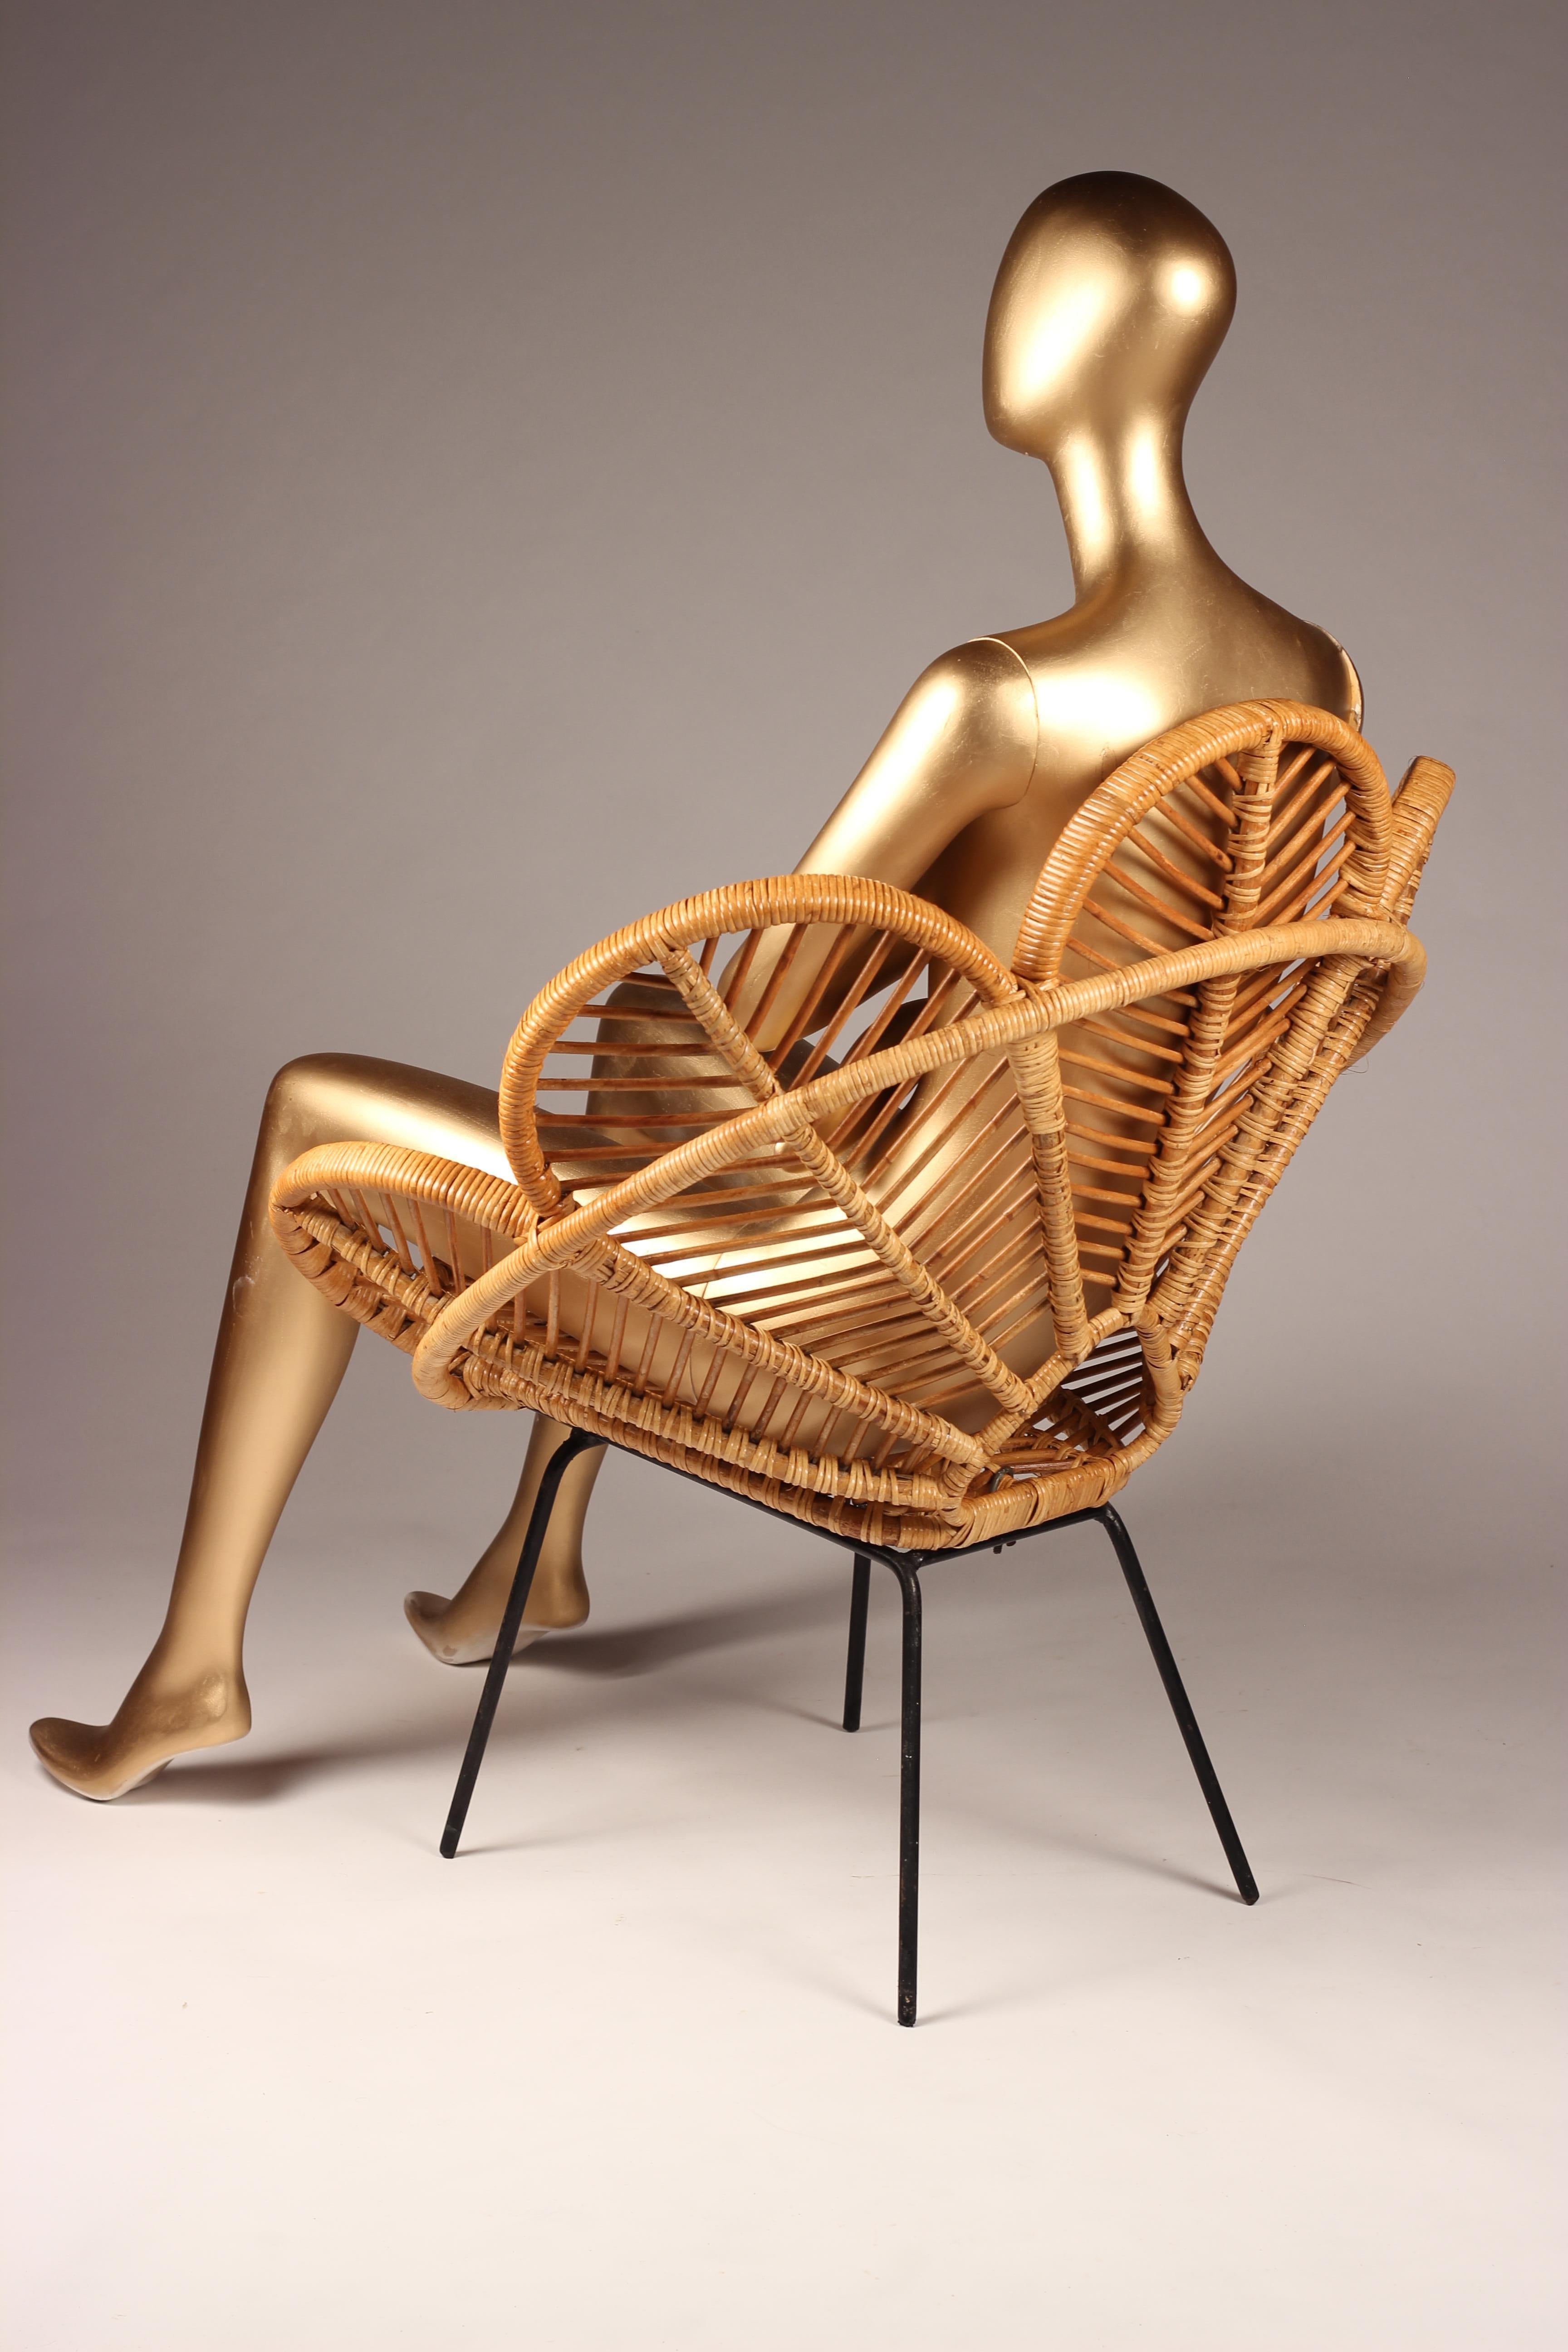 Cane, Wicker and Raffia Flower garden Chairs Mid Century French Design 4